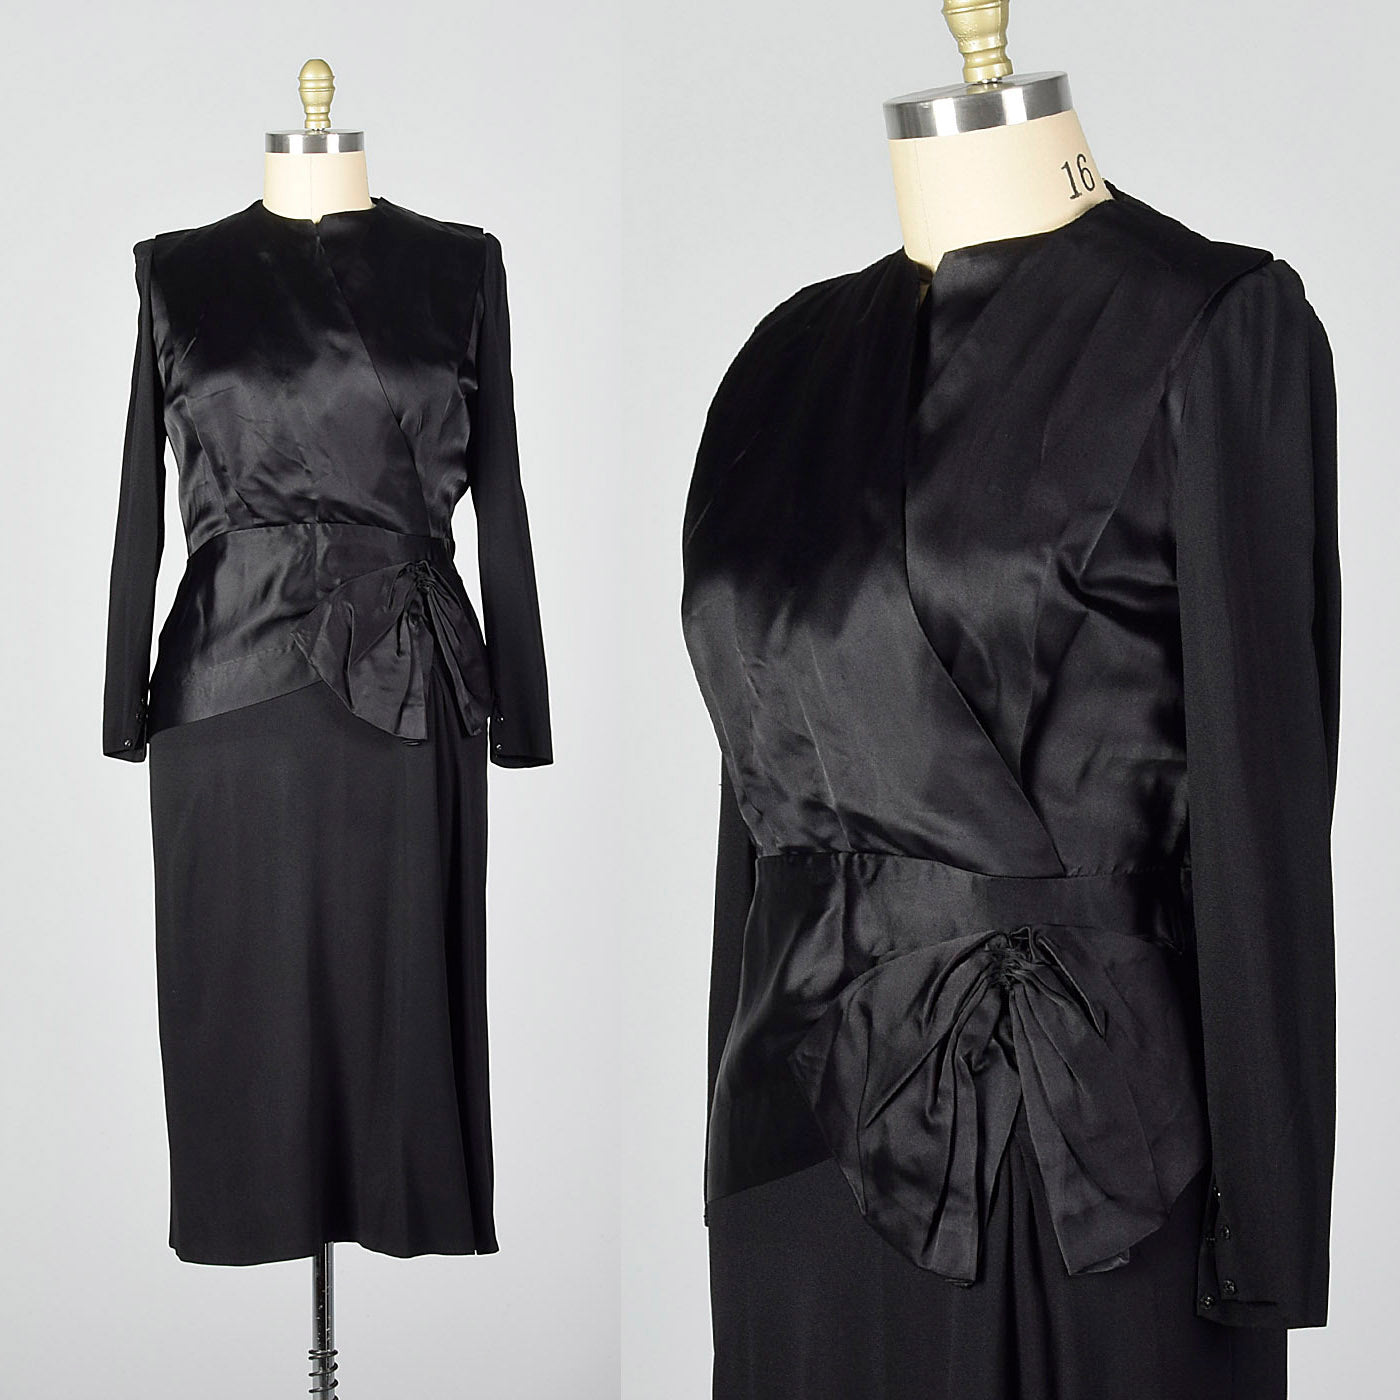 1940s Black Cocktail Dress with Satin Bodice